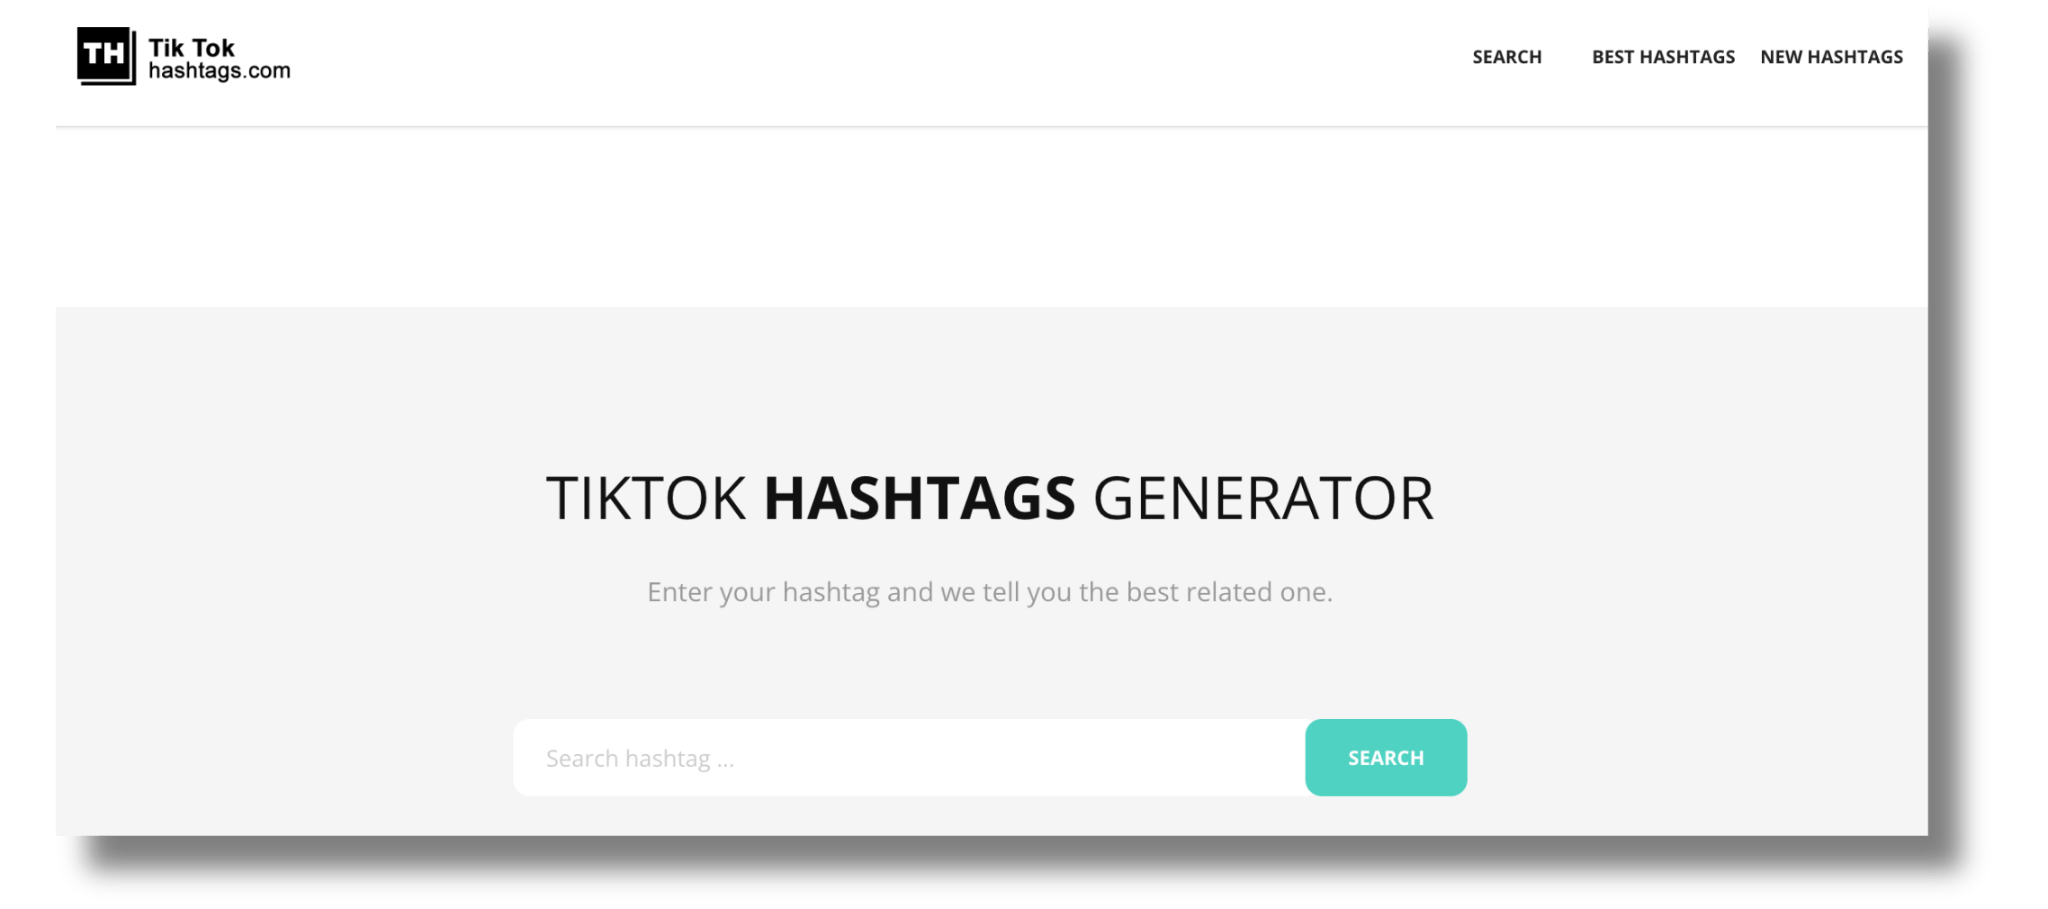 tiktok hashtag generator